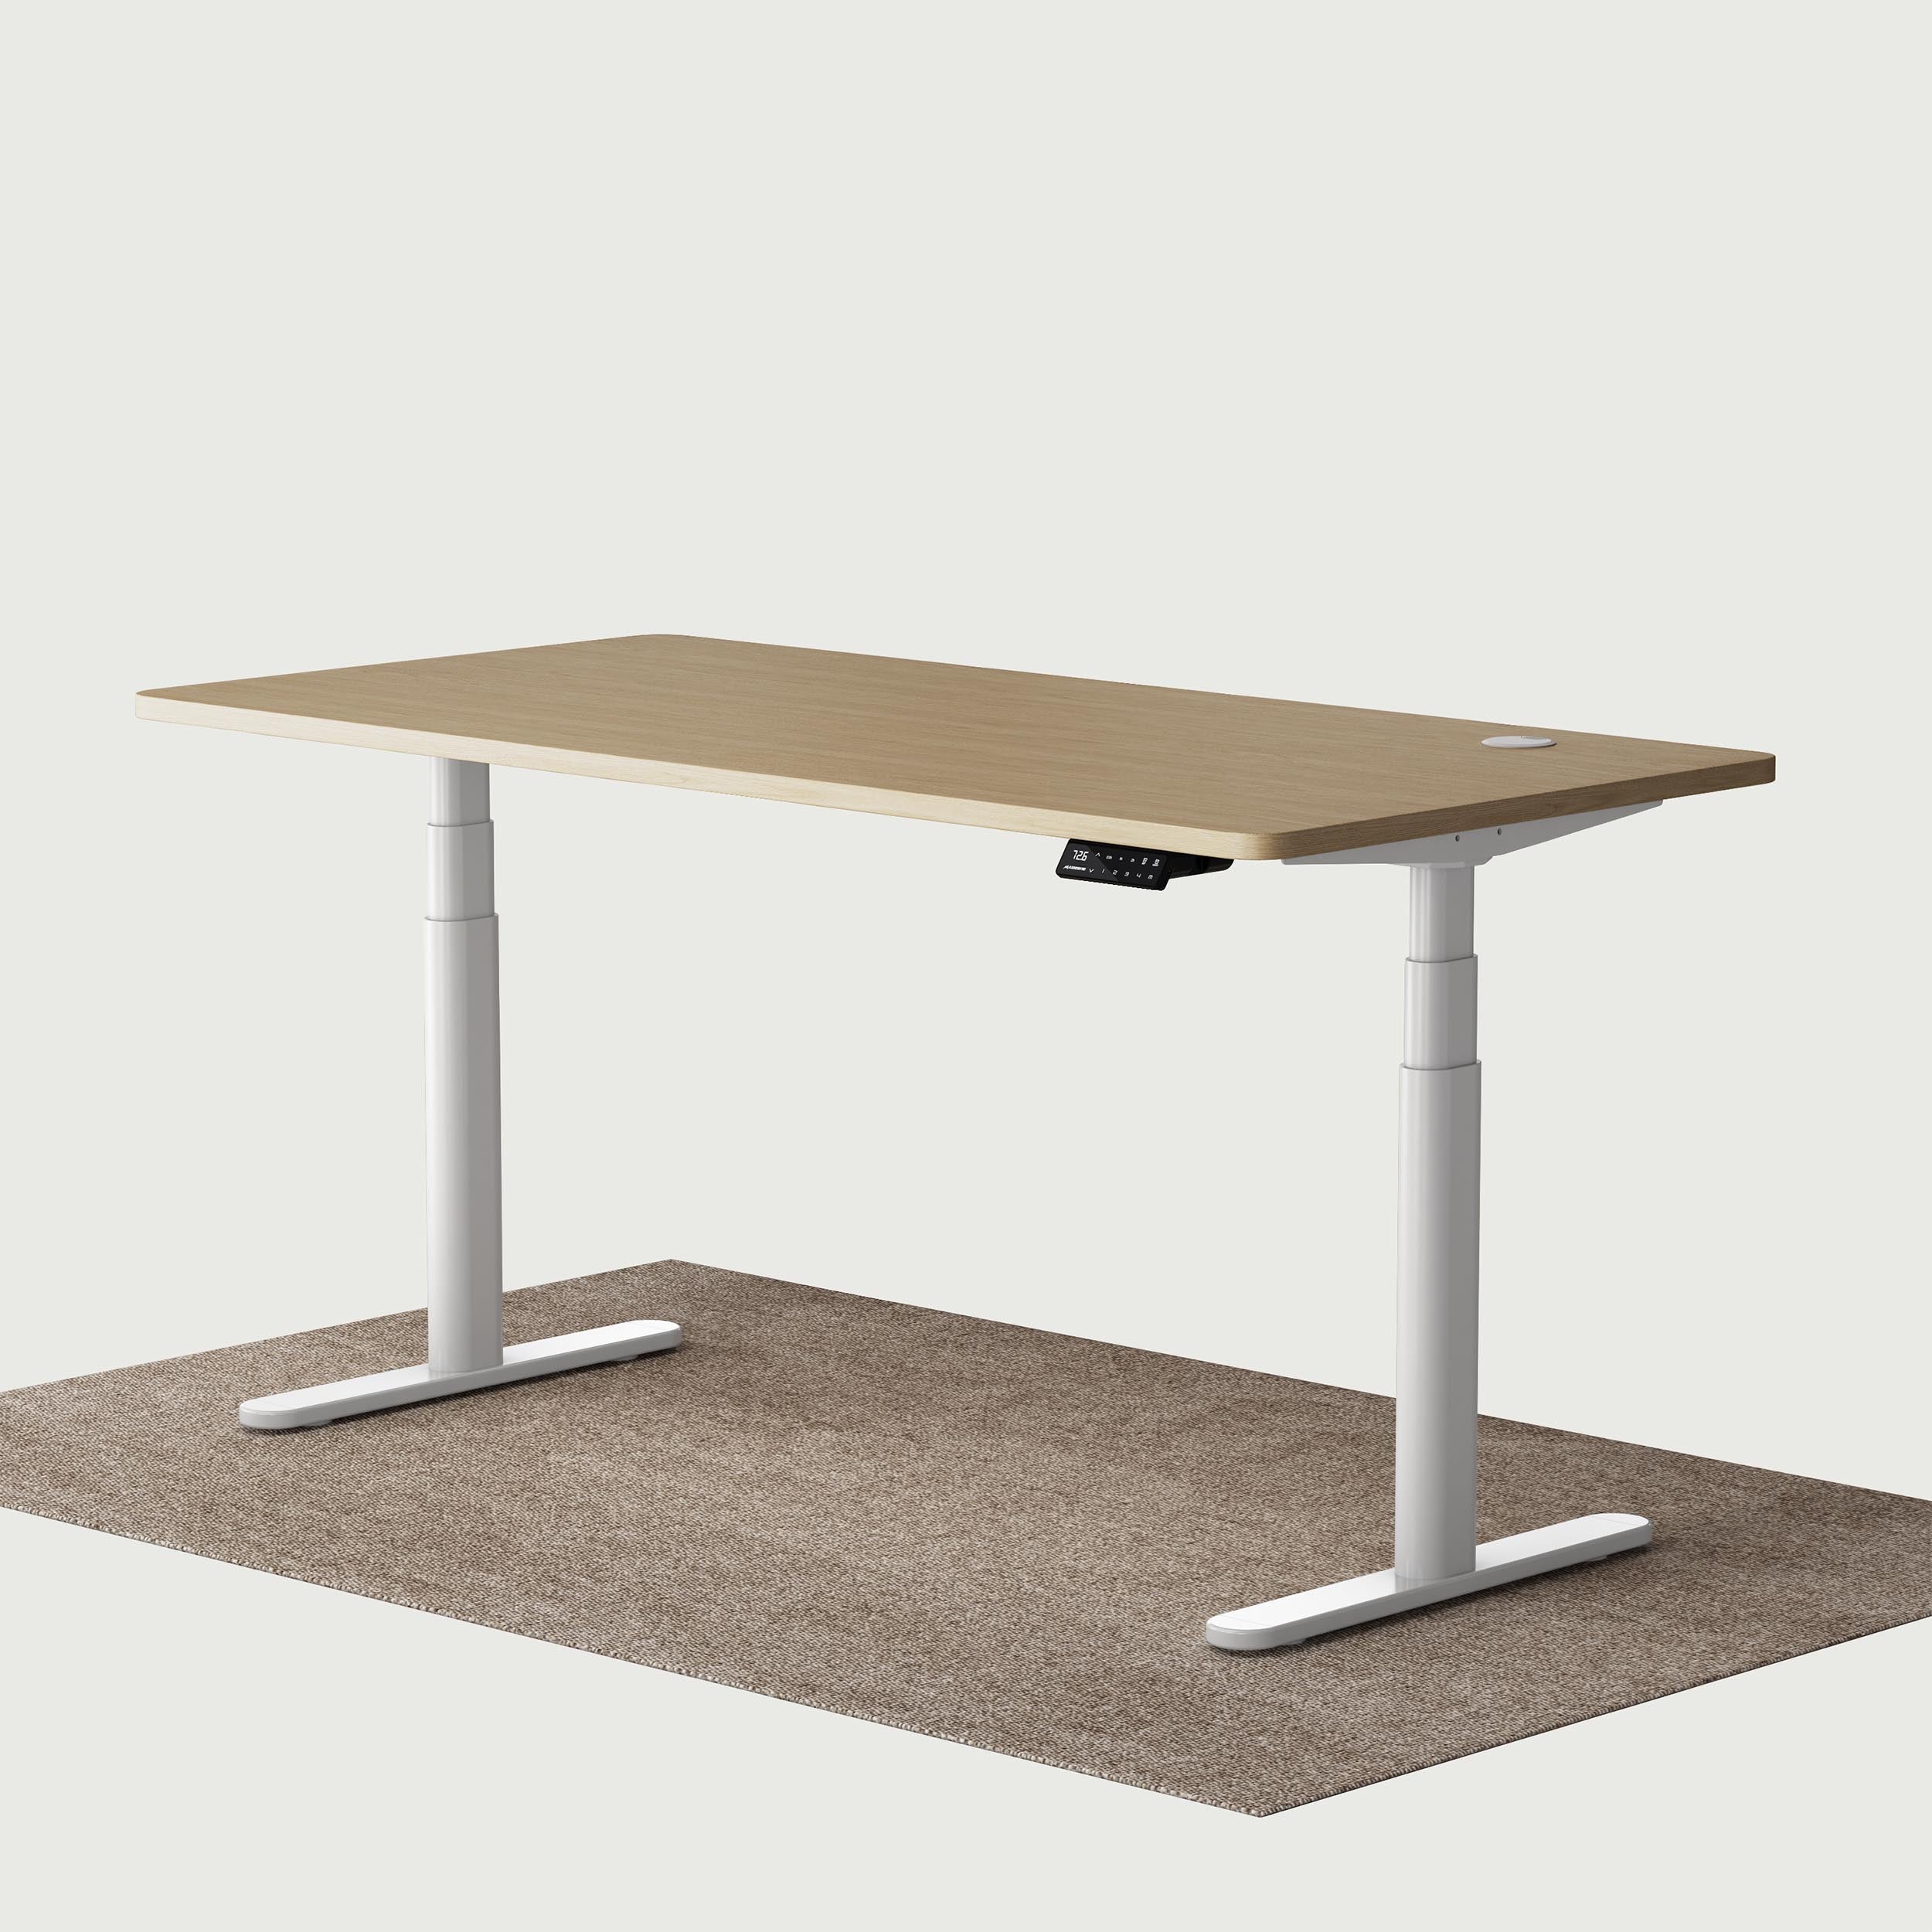 TH2 Pro Plus white oval electric standing desk frame with oak 160x80 cm desktop